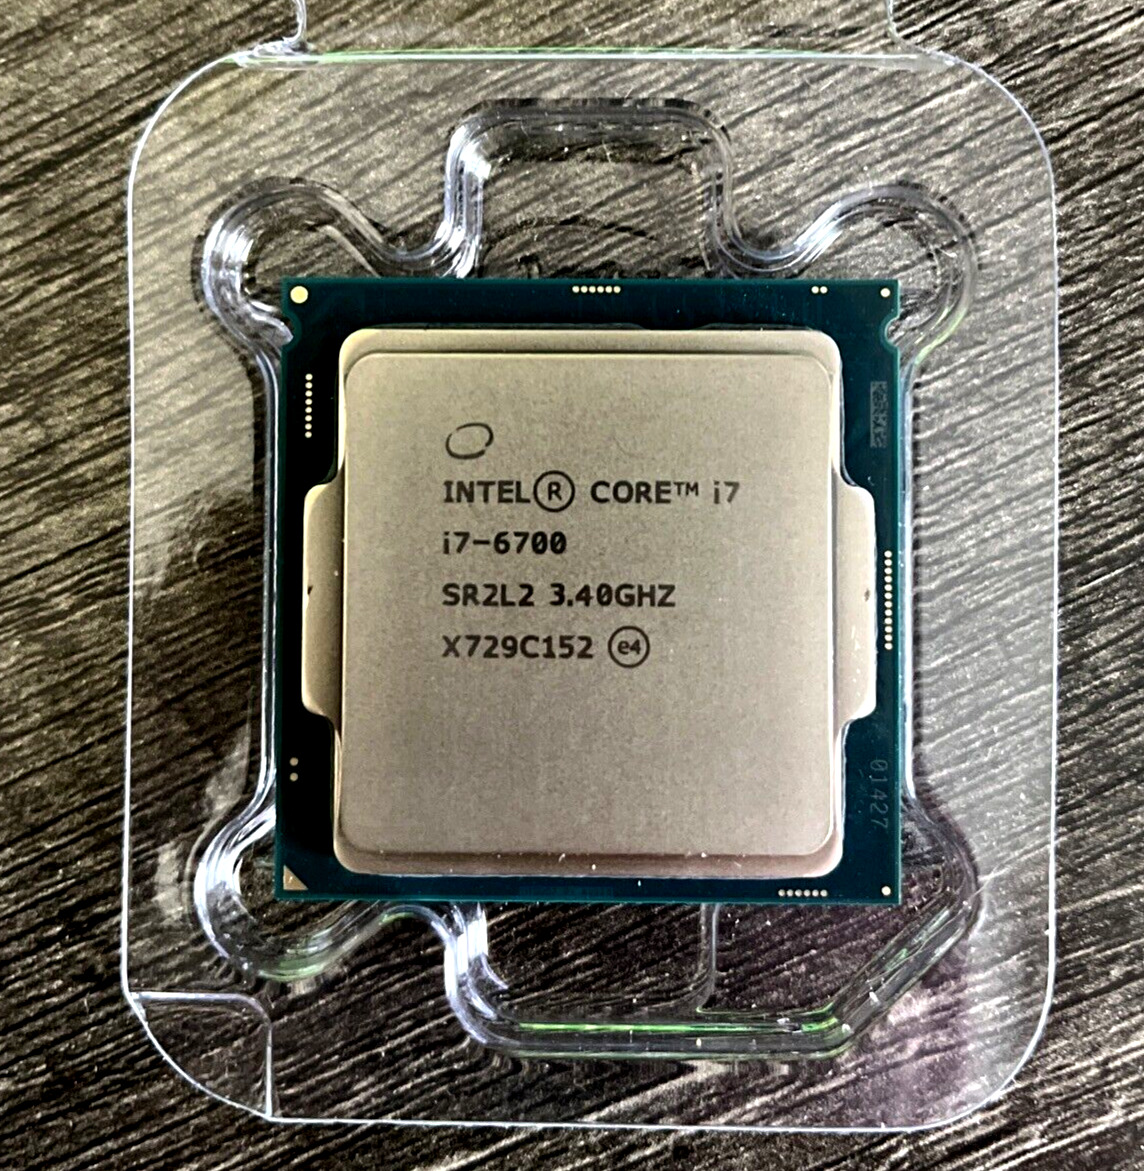 Intel Core I7-6700 SR2L2, 3.40GHz CPU Processor LGA 1151 C135